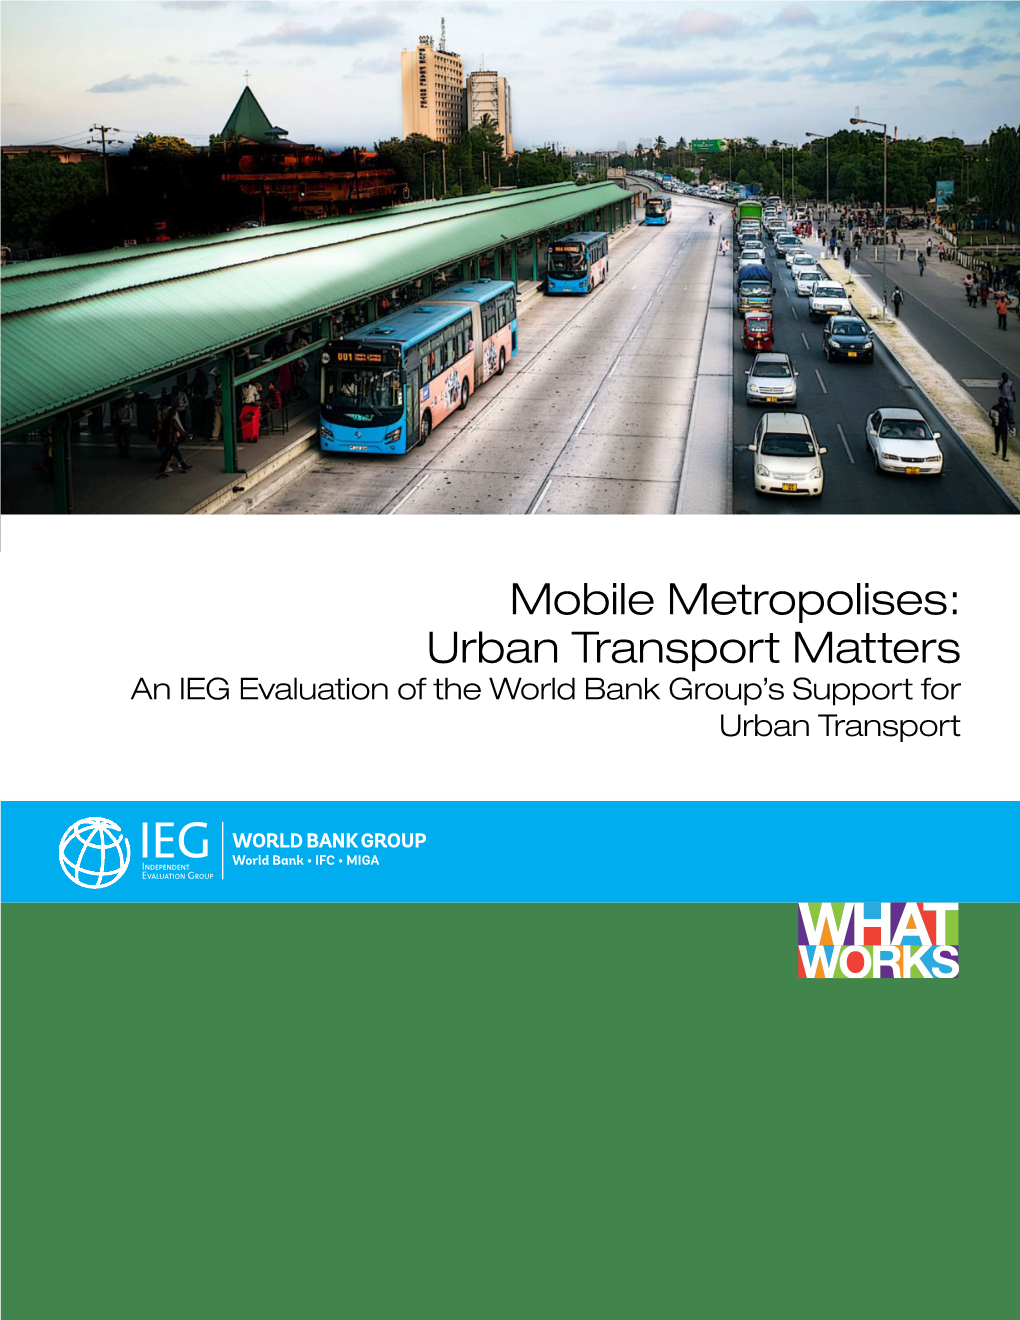 Urban Transport Matters